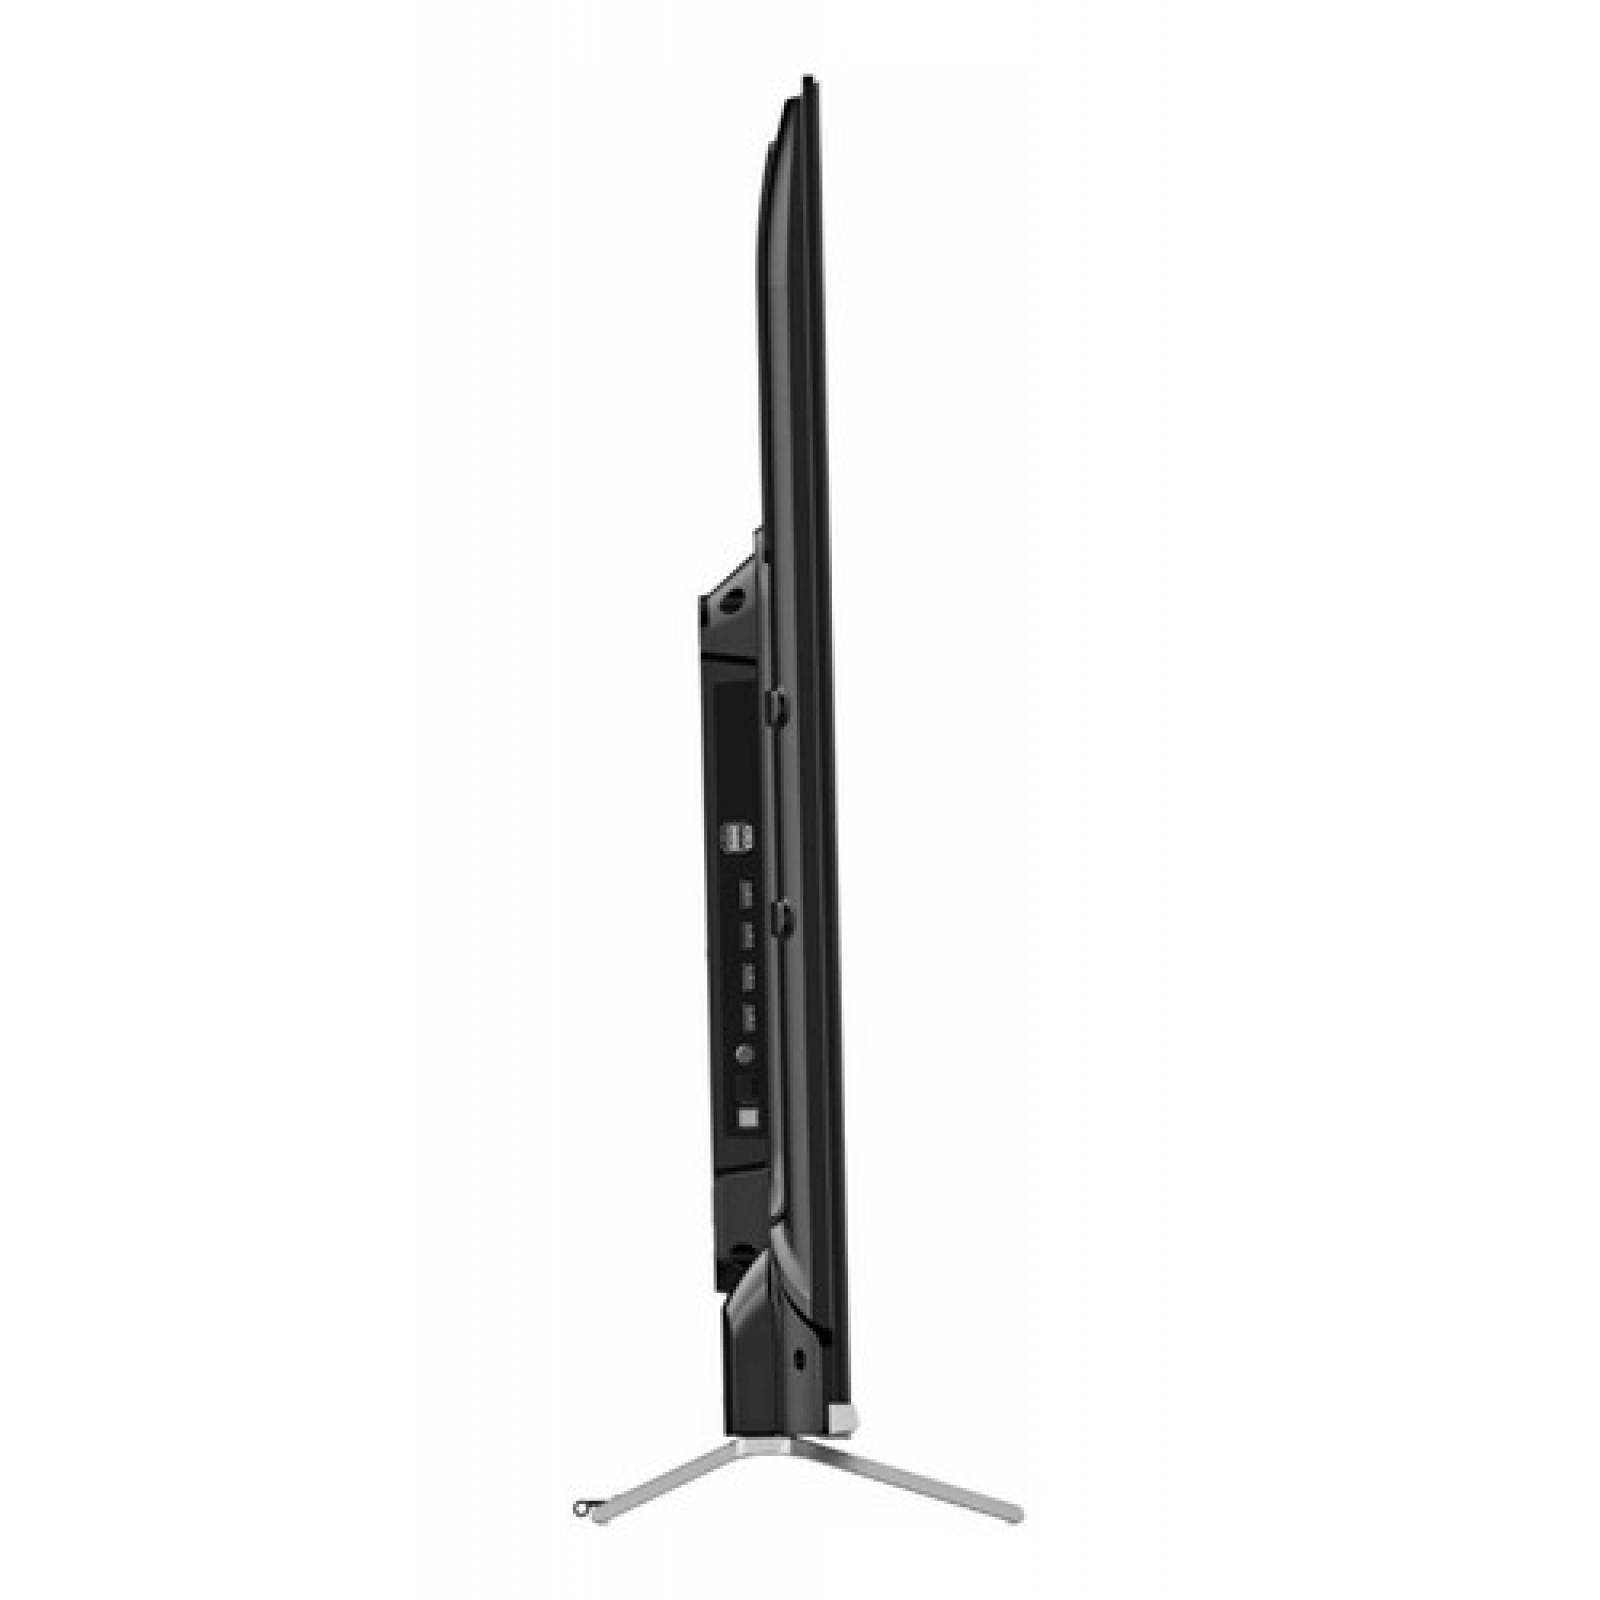 Smart Tv Toshiba 65 Pul C350 Series Led 4k Uhd Smart Fire Tv REACONDICIONADO  TIPO A